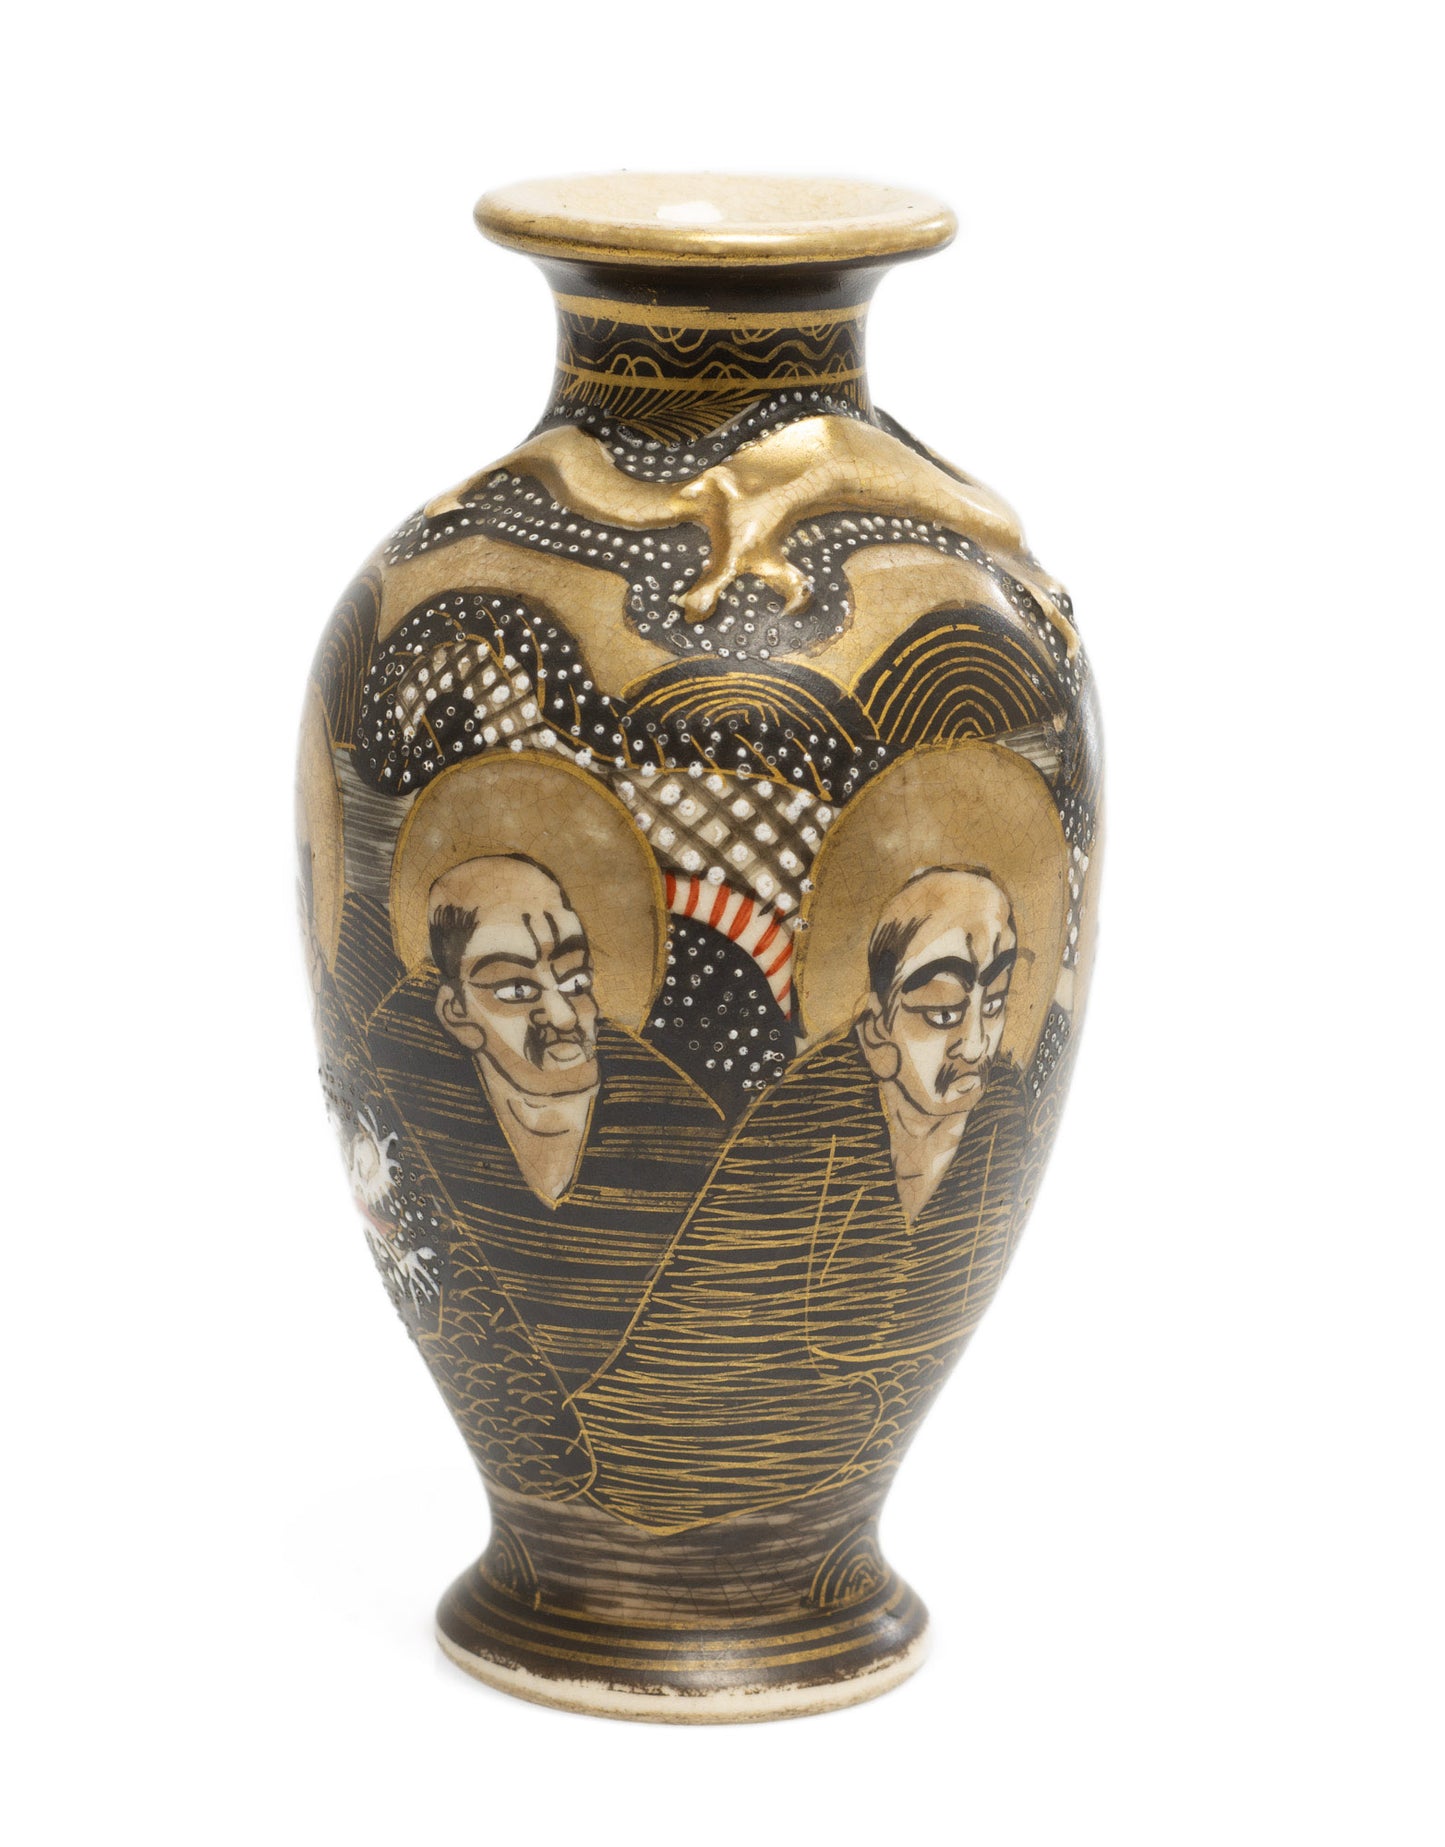 Antique Japanese Satsuma Ware Vase with Rakan & Dragon Signed Maruni (Code 2649)